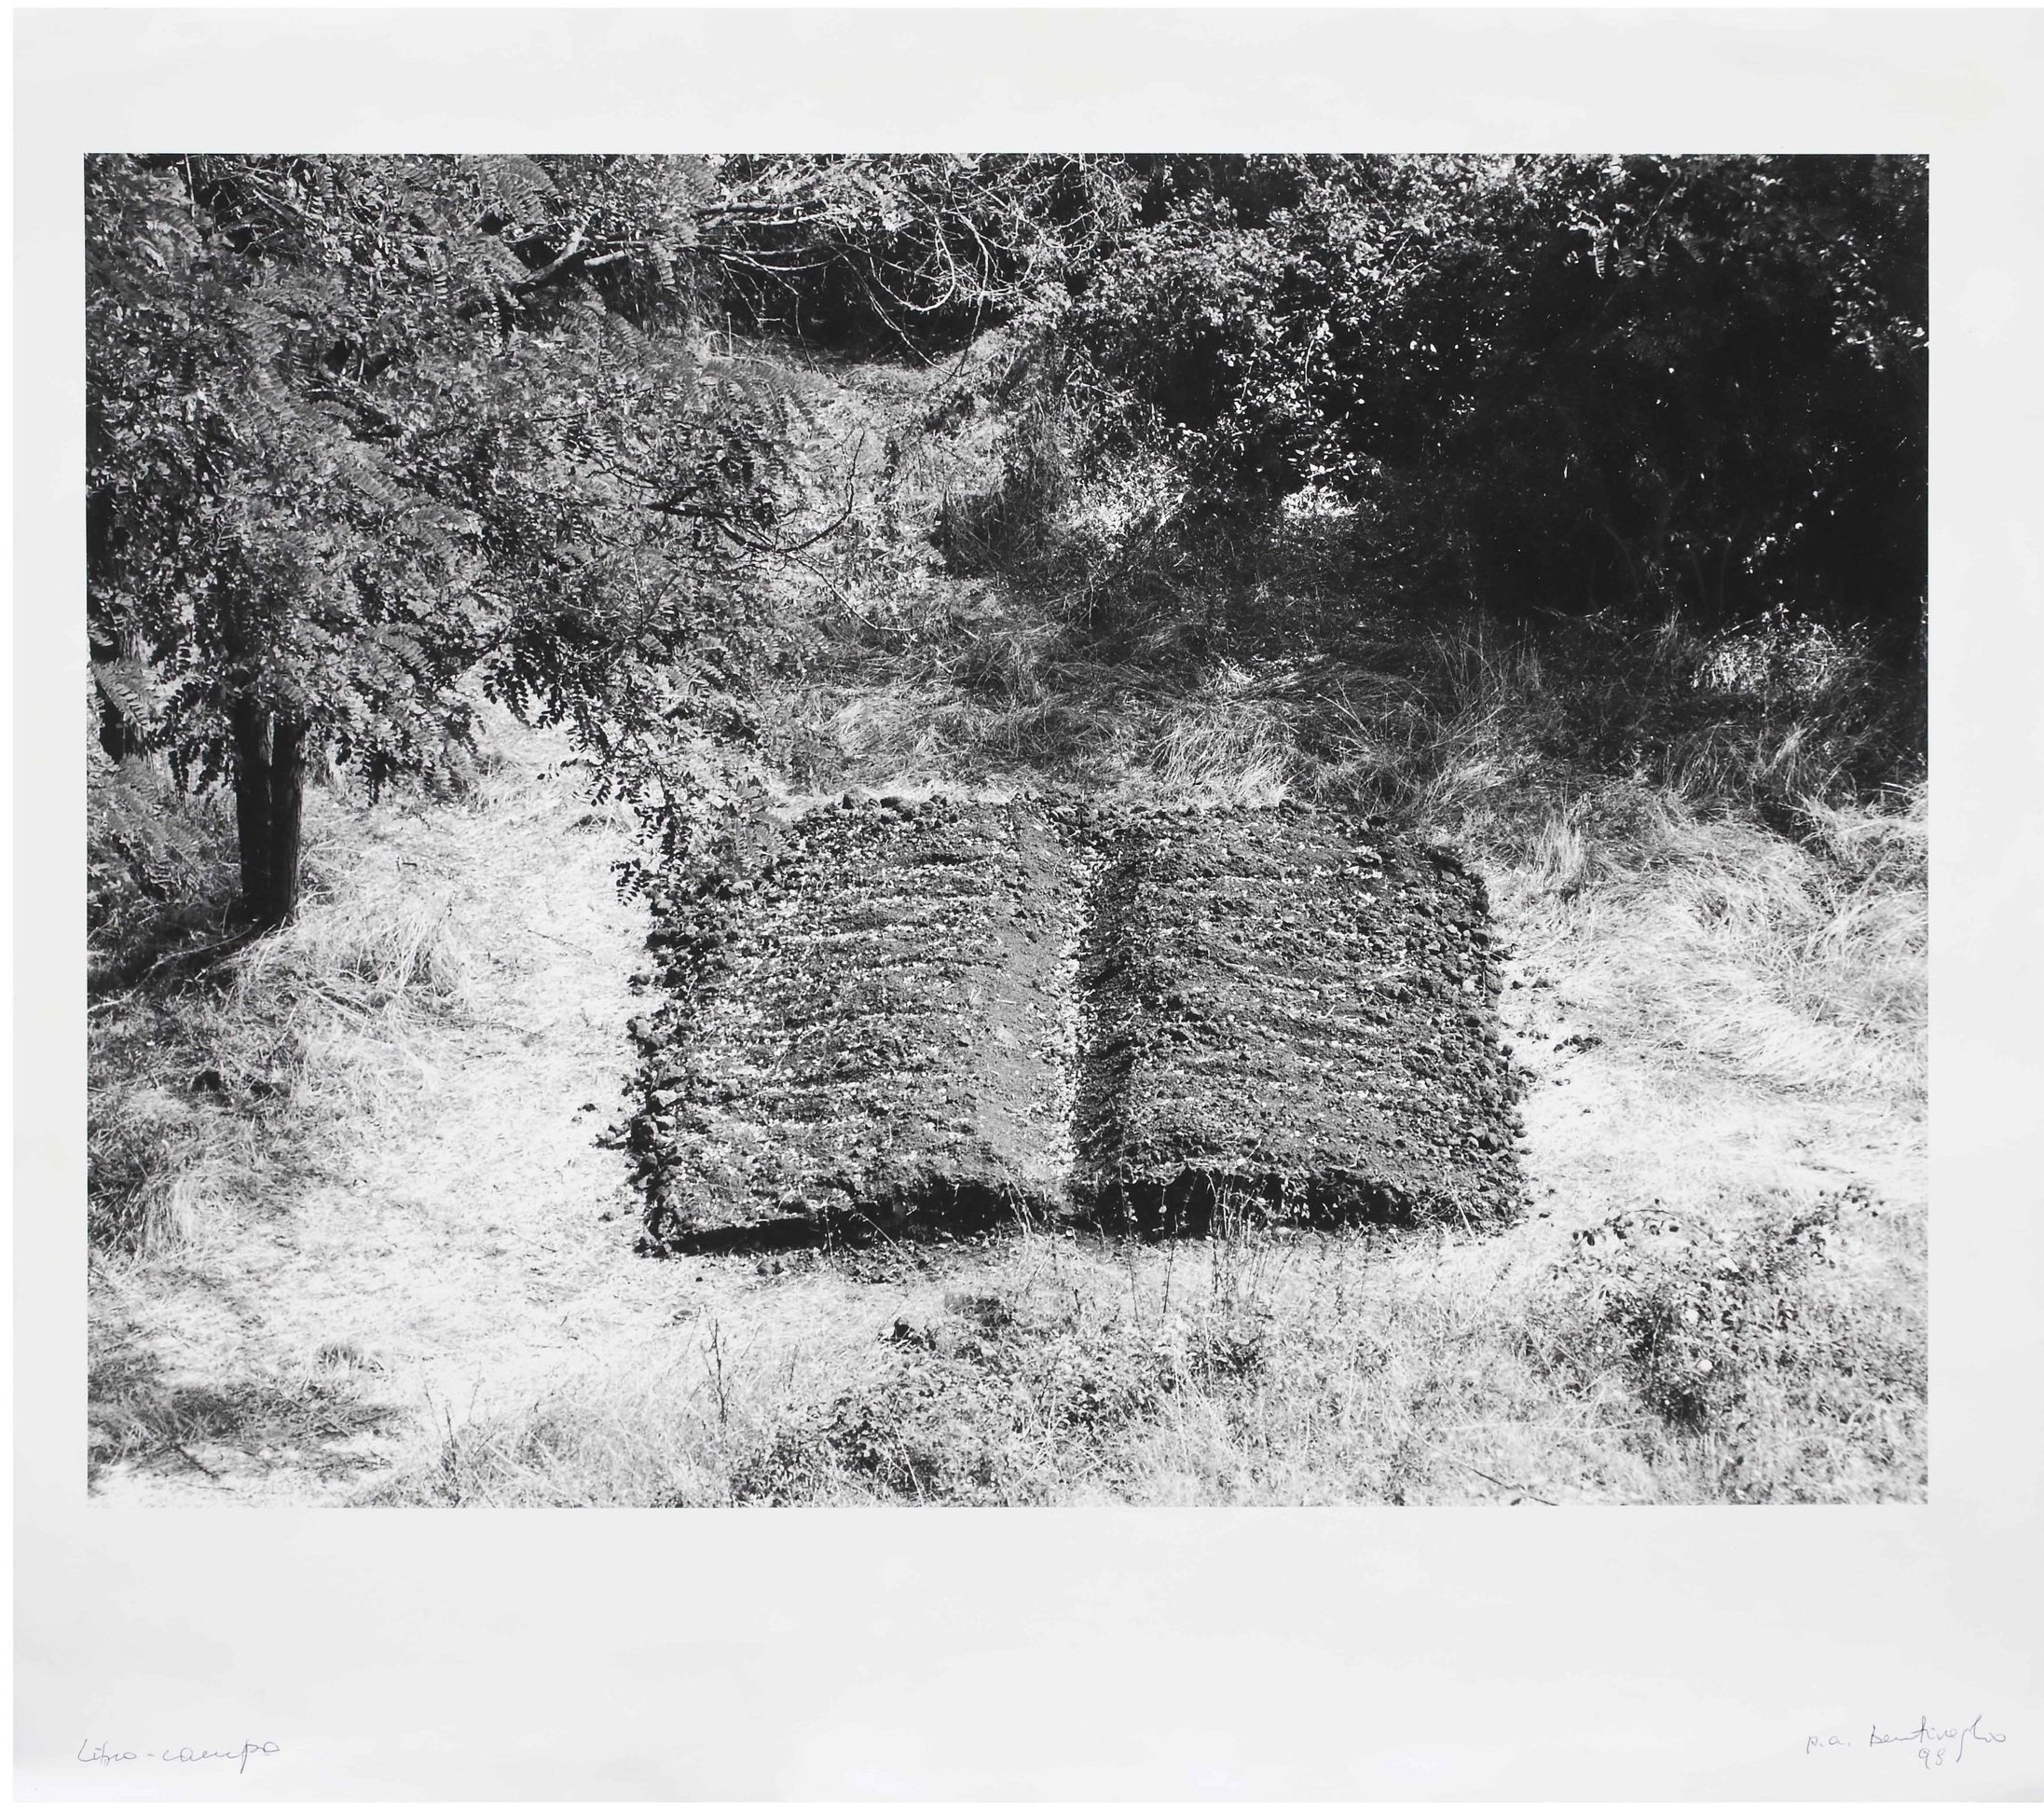 Field-book, 1998
Land art work, Bassano in Teverina, 600 x 800 cm